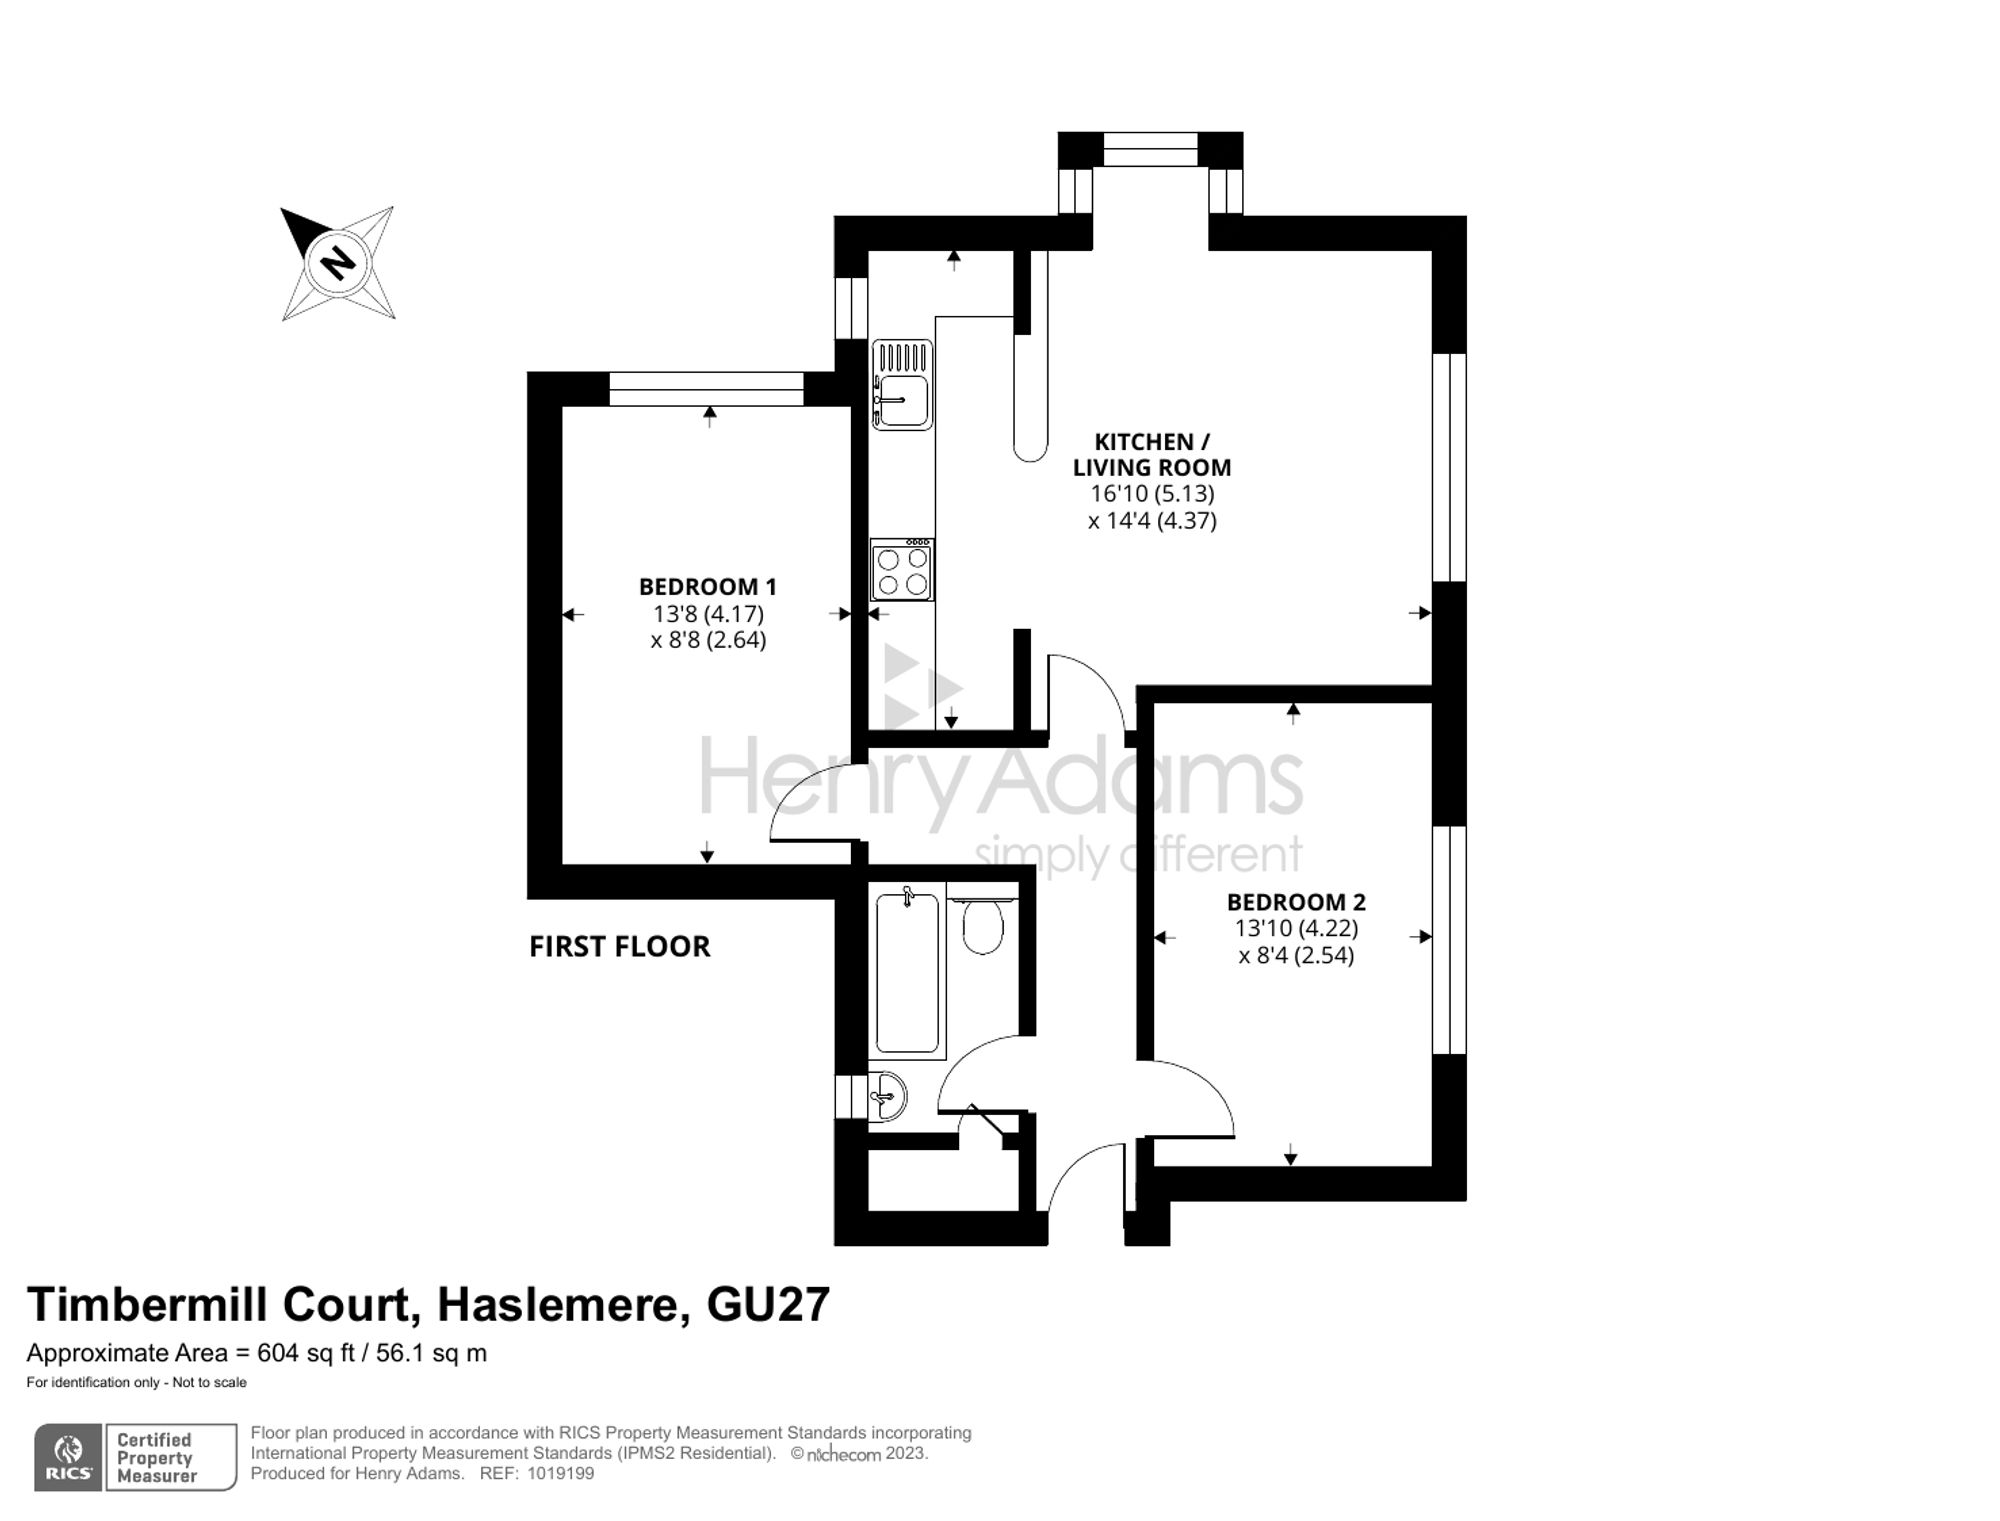 Timbermill Court, Haslemere, GU27 floorplans